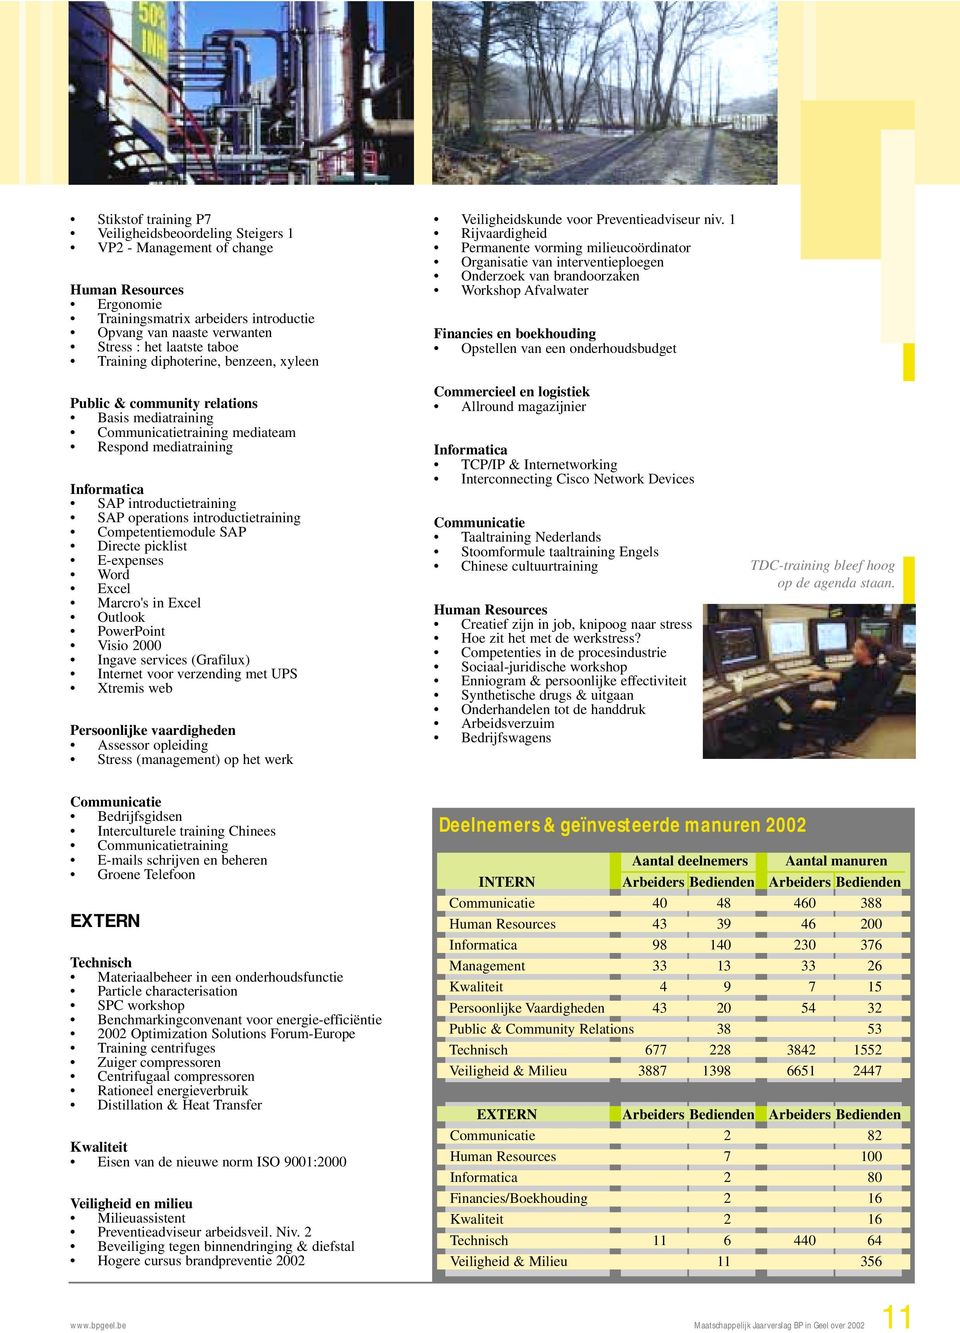 introductietraining Competentiemodule SAP Directe picklist E-expenses Word Excel Marcro's in Excel Outlook PowerPoint Visio 2000 Ingave services (Grafilux) Internet voor verzending met UPS Xtremis